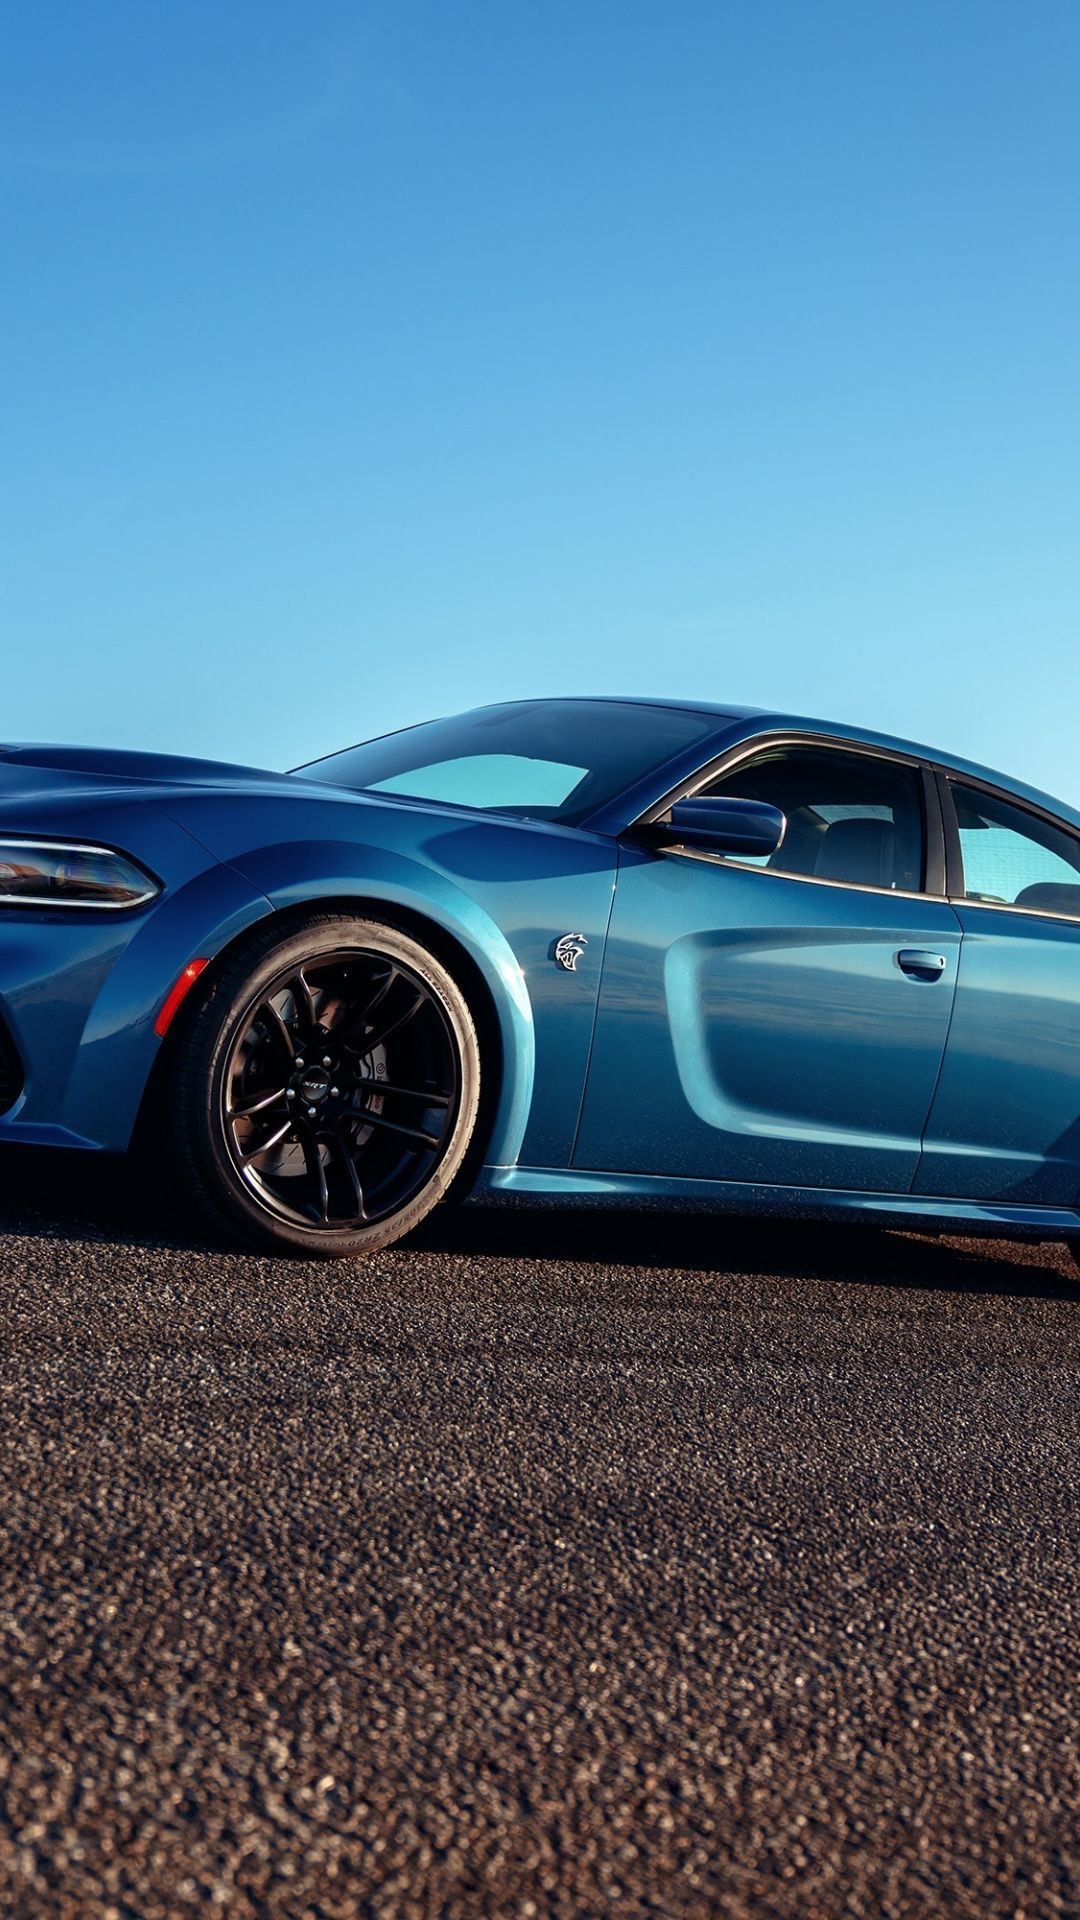 Blue car, Dodge Charger SRT Hellcat, 2019 wallpaper. Charger srt hellcat, Dodge charger, Dodge charger srt